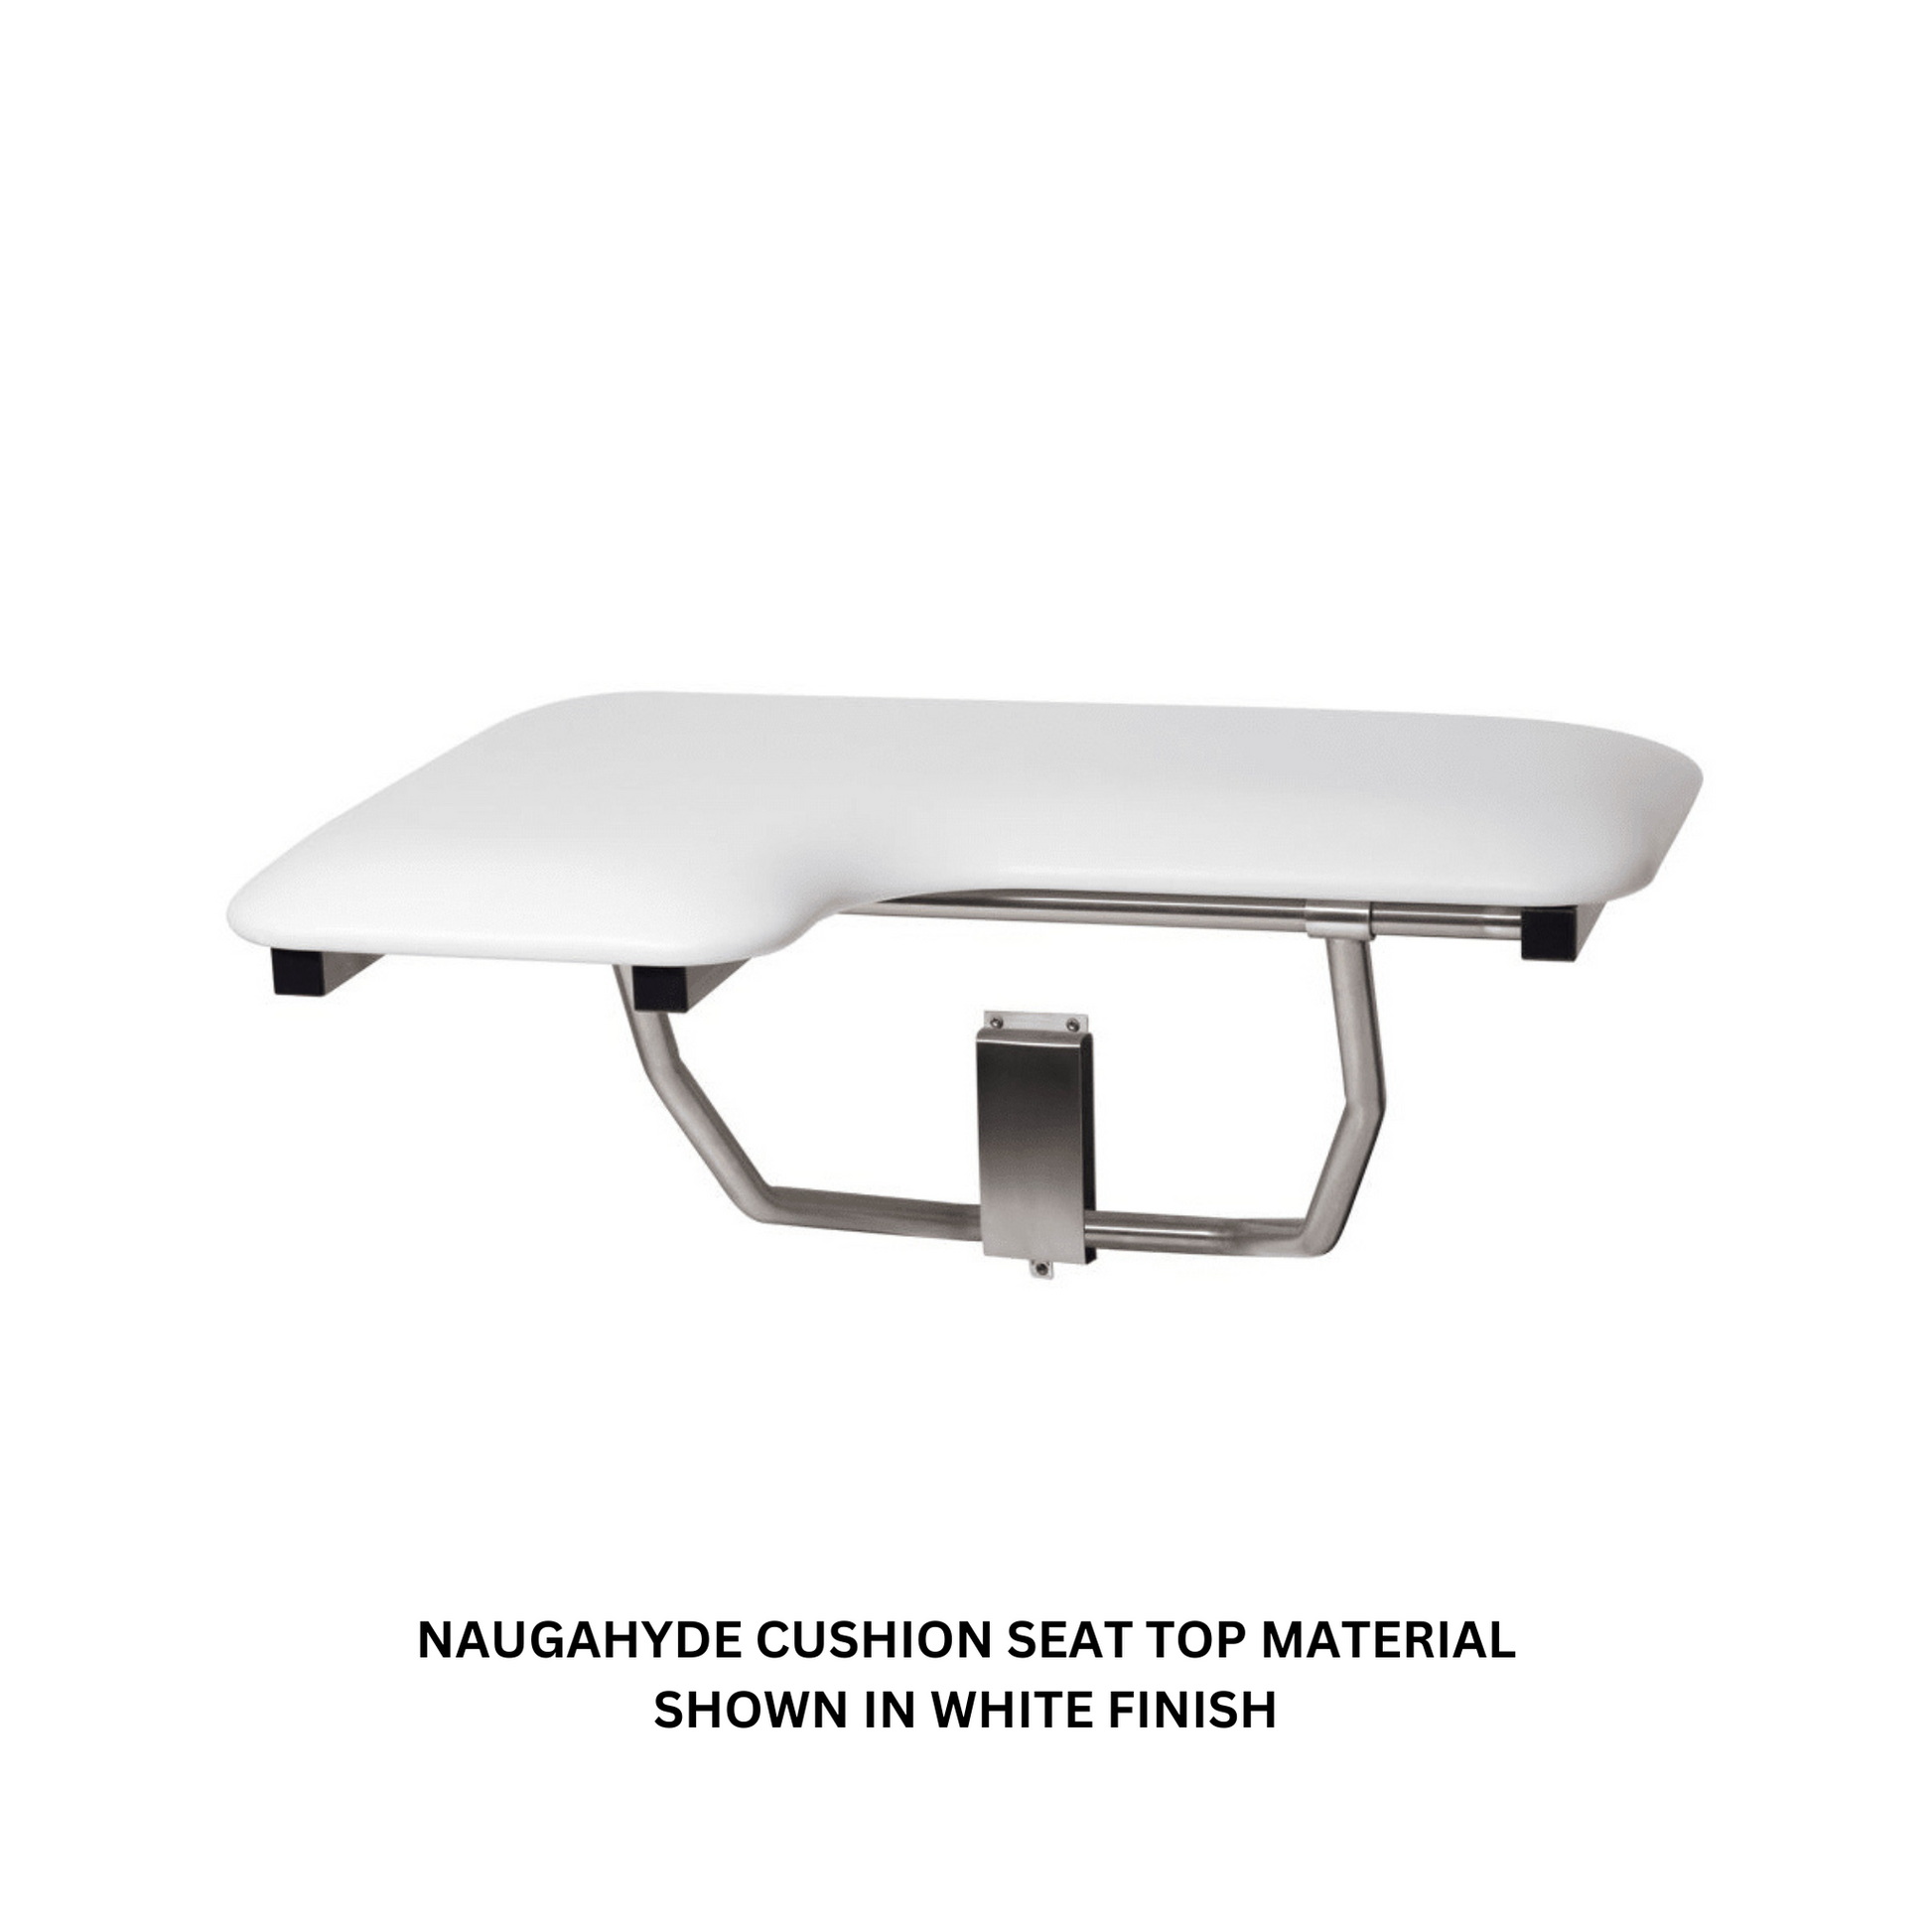 Seachrome Signature Series 32" W x 23" D Naugahyde Almond Cushion Right-Handed Configuration L-Shaped Transfer Shower Seat